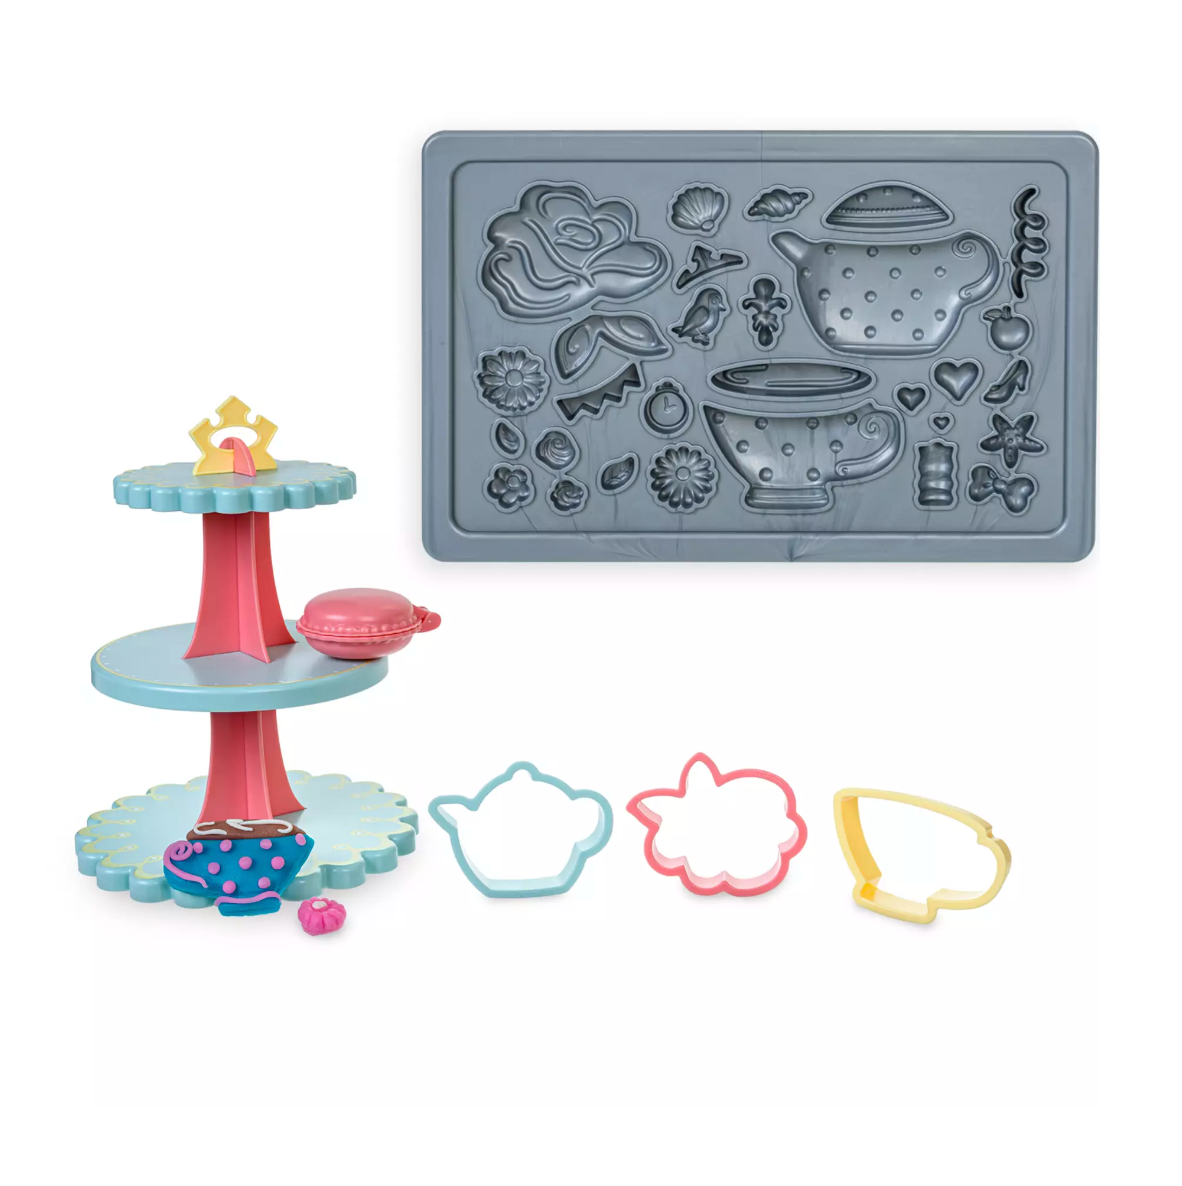 Disney Princess Cinderella Ariel Belle and Tiana Tea Party Set Toy New with Box